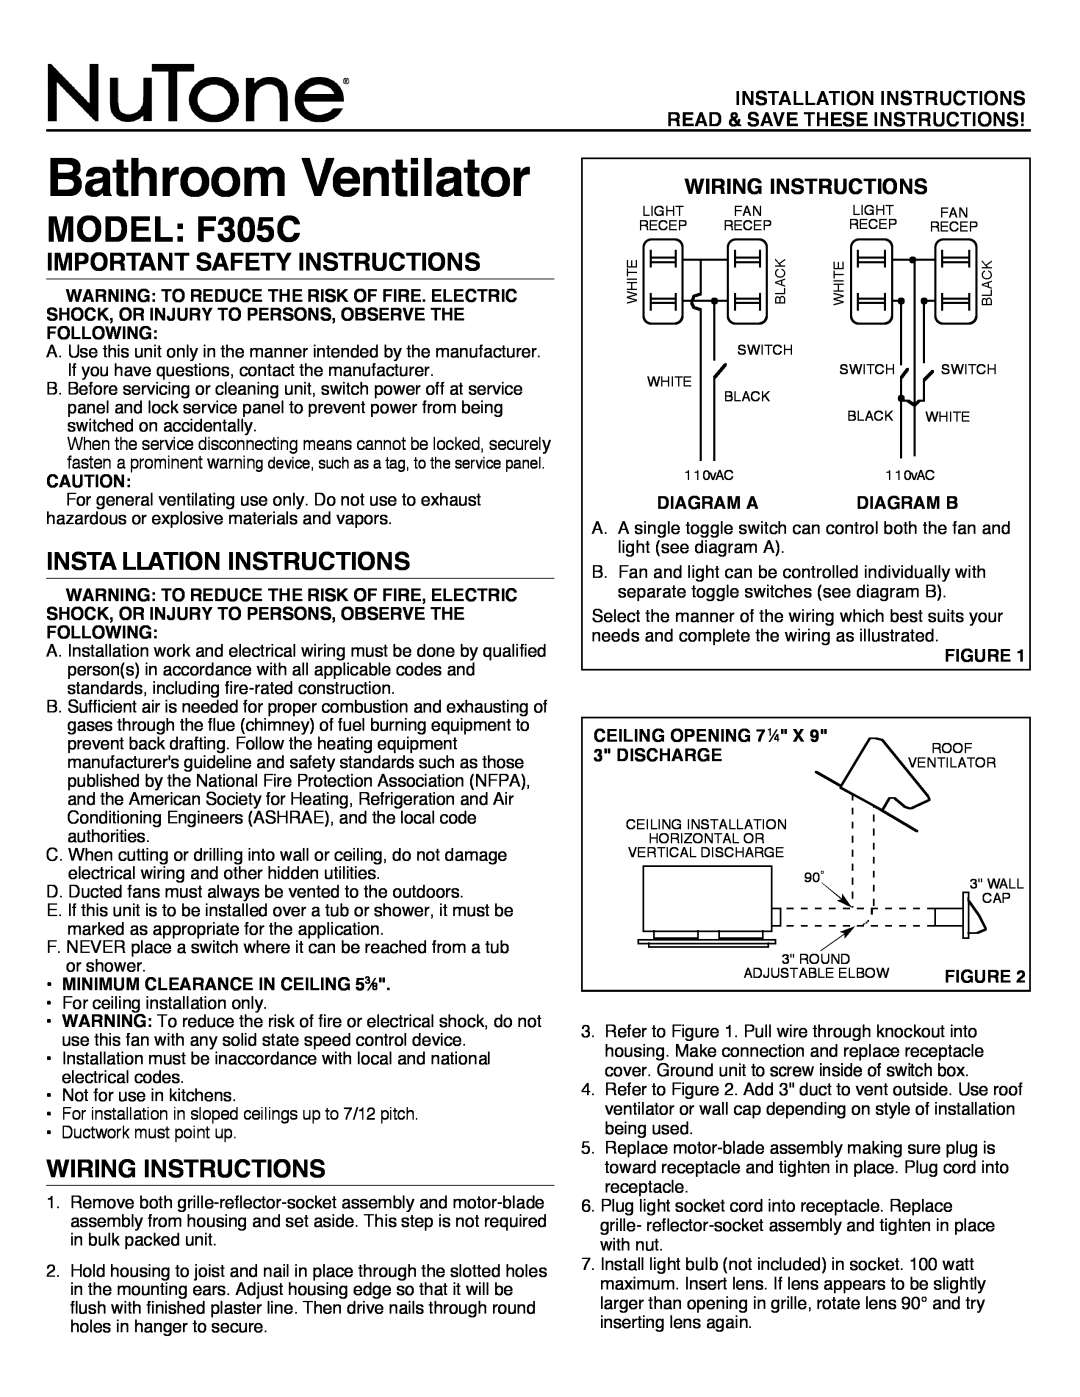 NuTone installation instructions Bathroom Ventilator, MODEL F305C, Important Safety Instructions, Wiring Instructions 